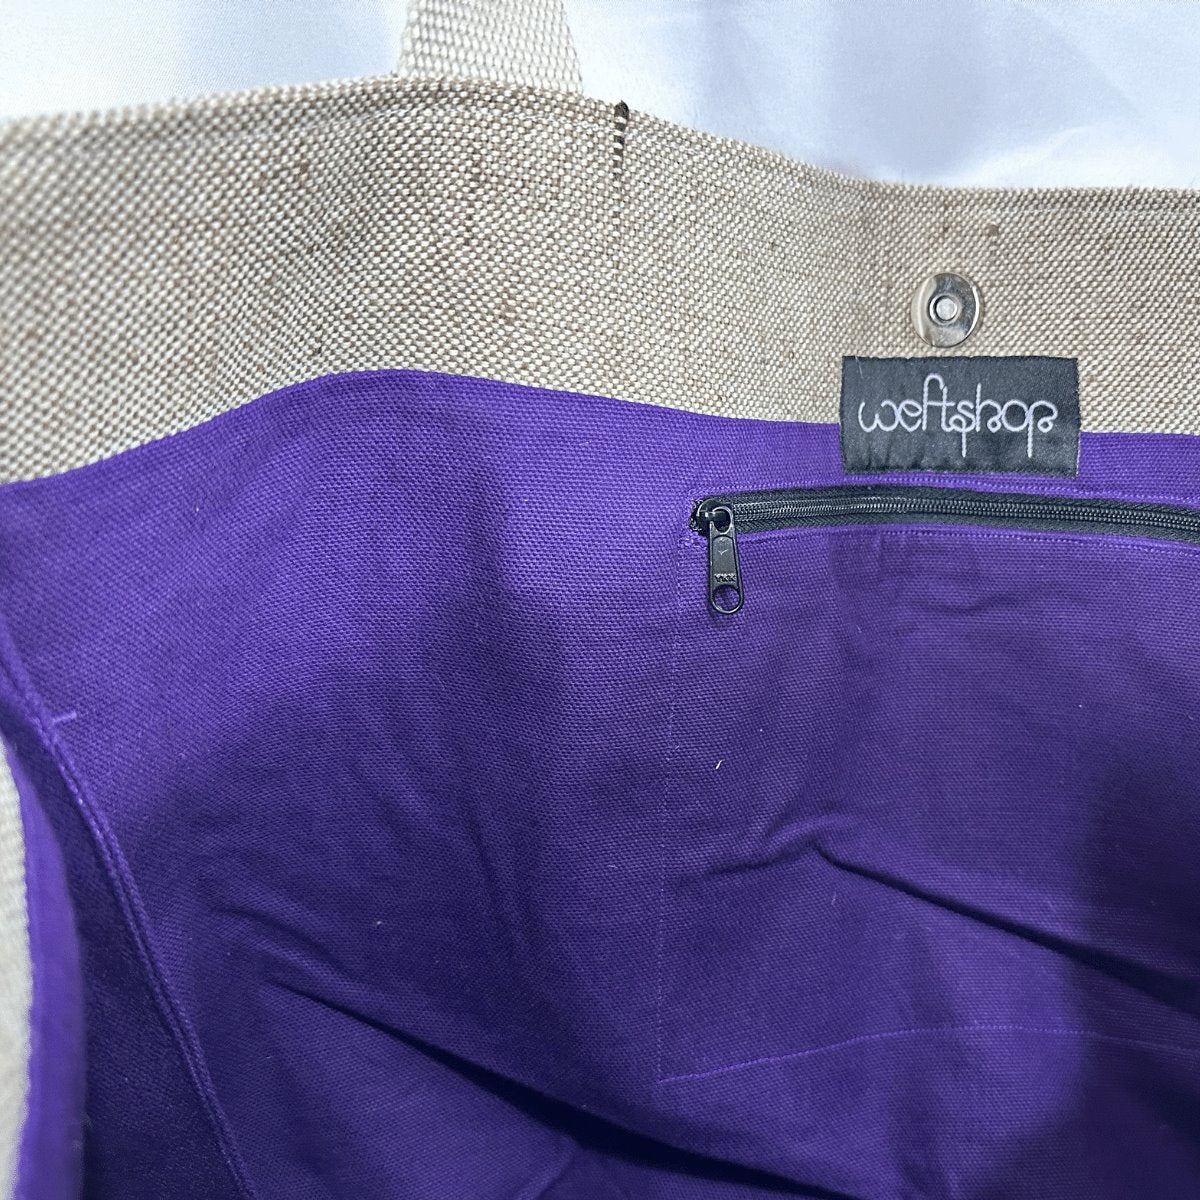 Cockatoo Jute Tote in Purple Bags and purses WEFTshop 